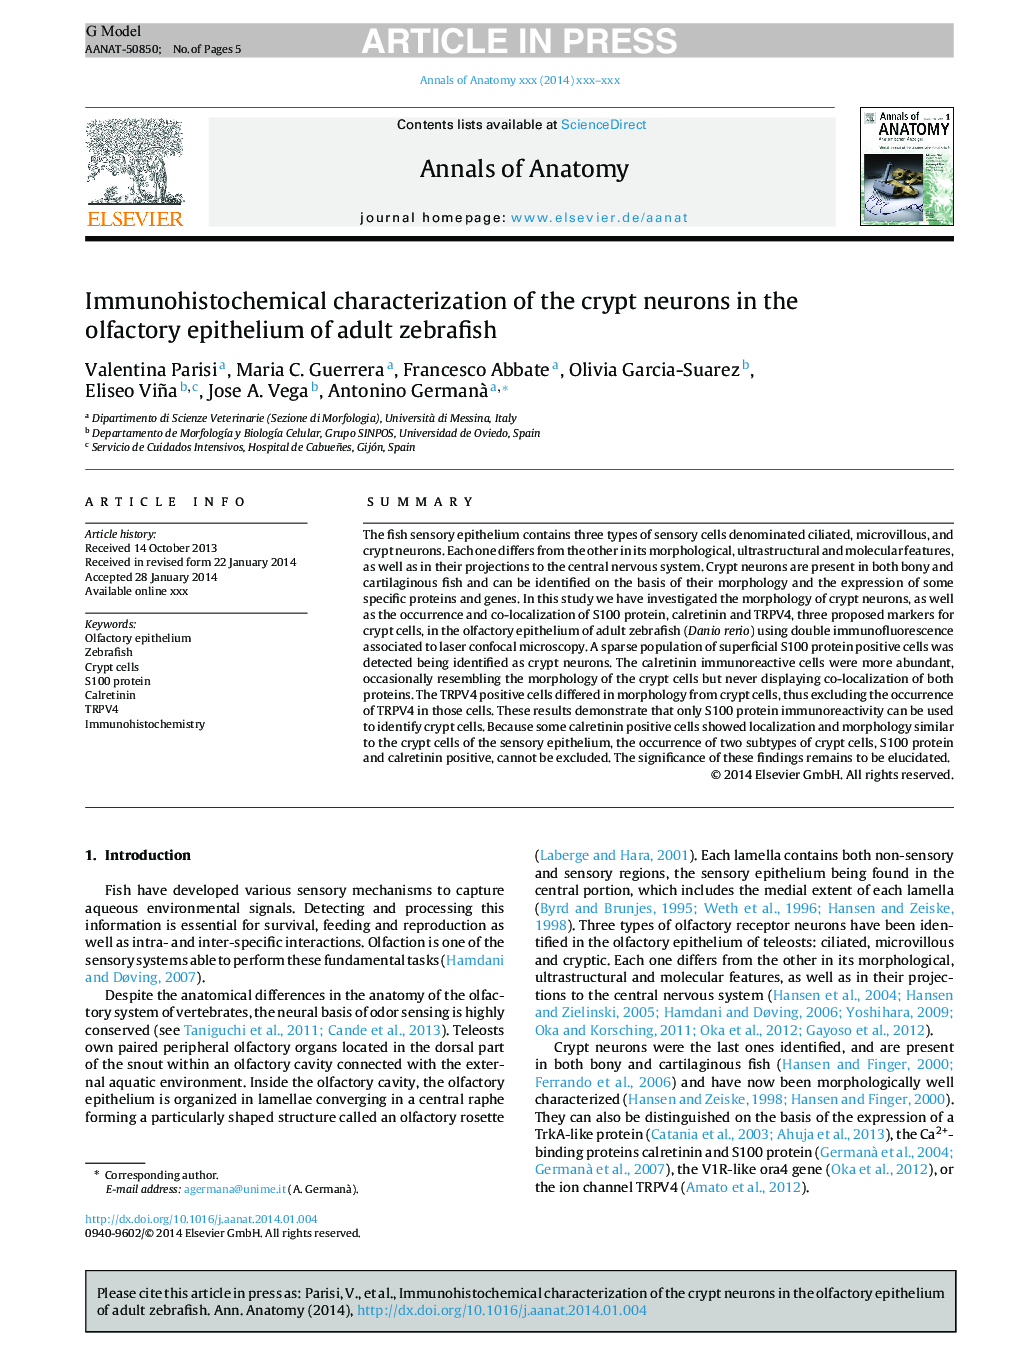 Immunohistochemical characterization of the crypt neurons in the olfactory epithelium of adult zebrafish